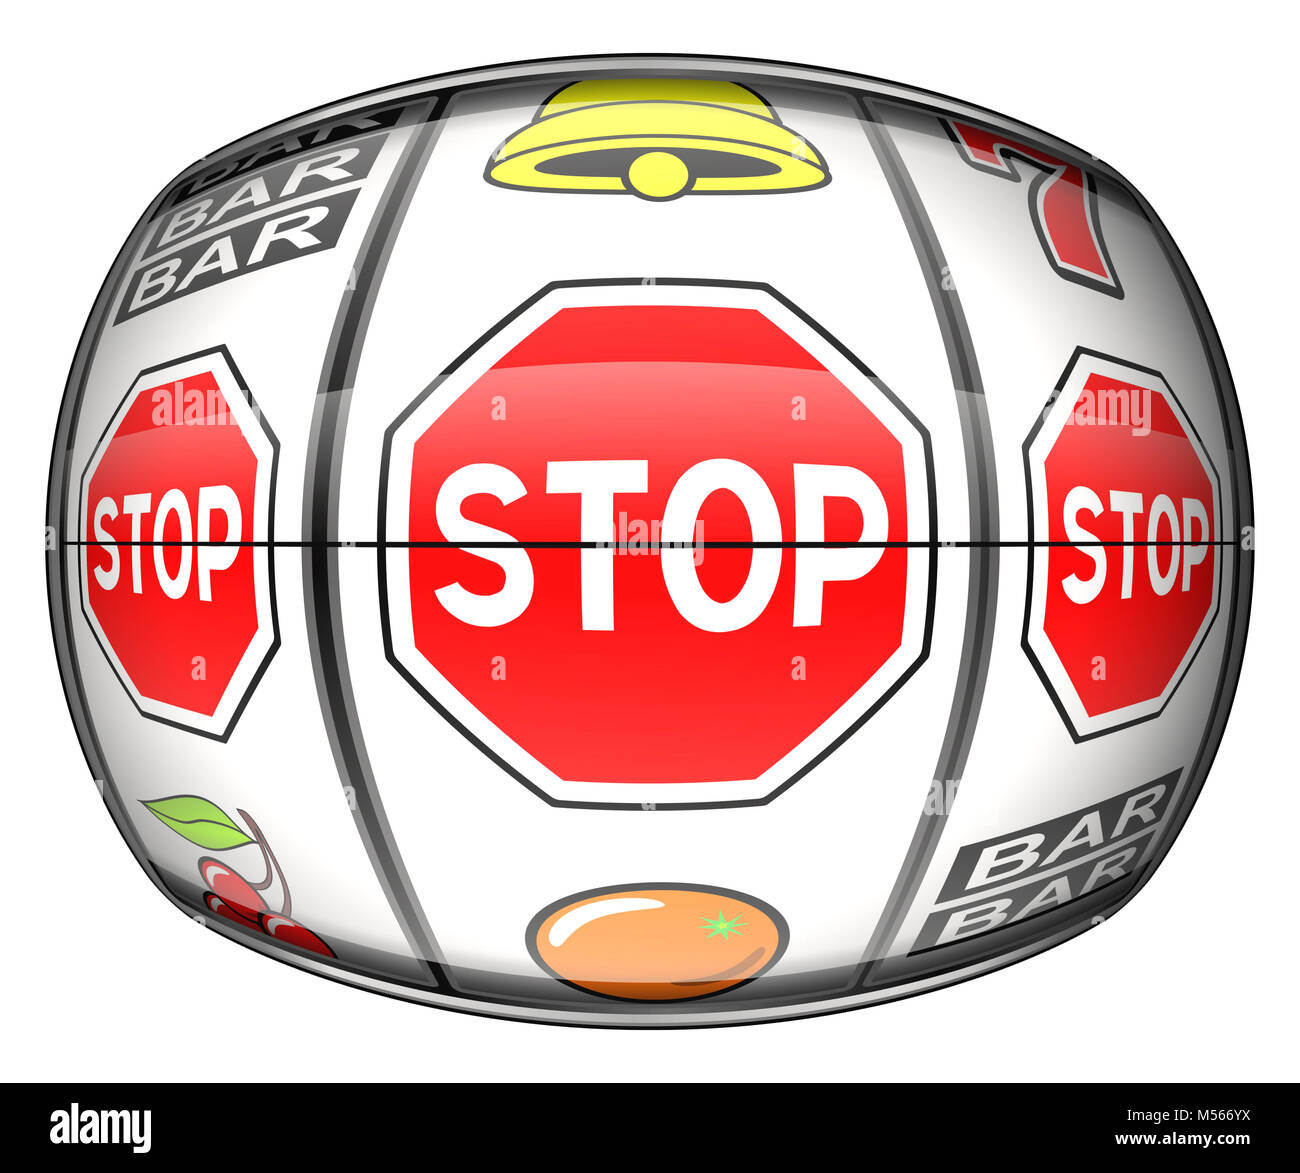 Gambling addiction illustration. 3 warning stops, addiction concept Stock Photo